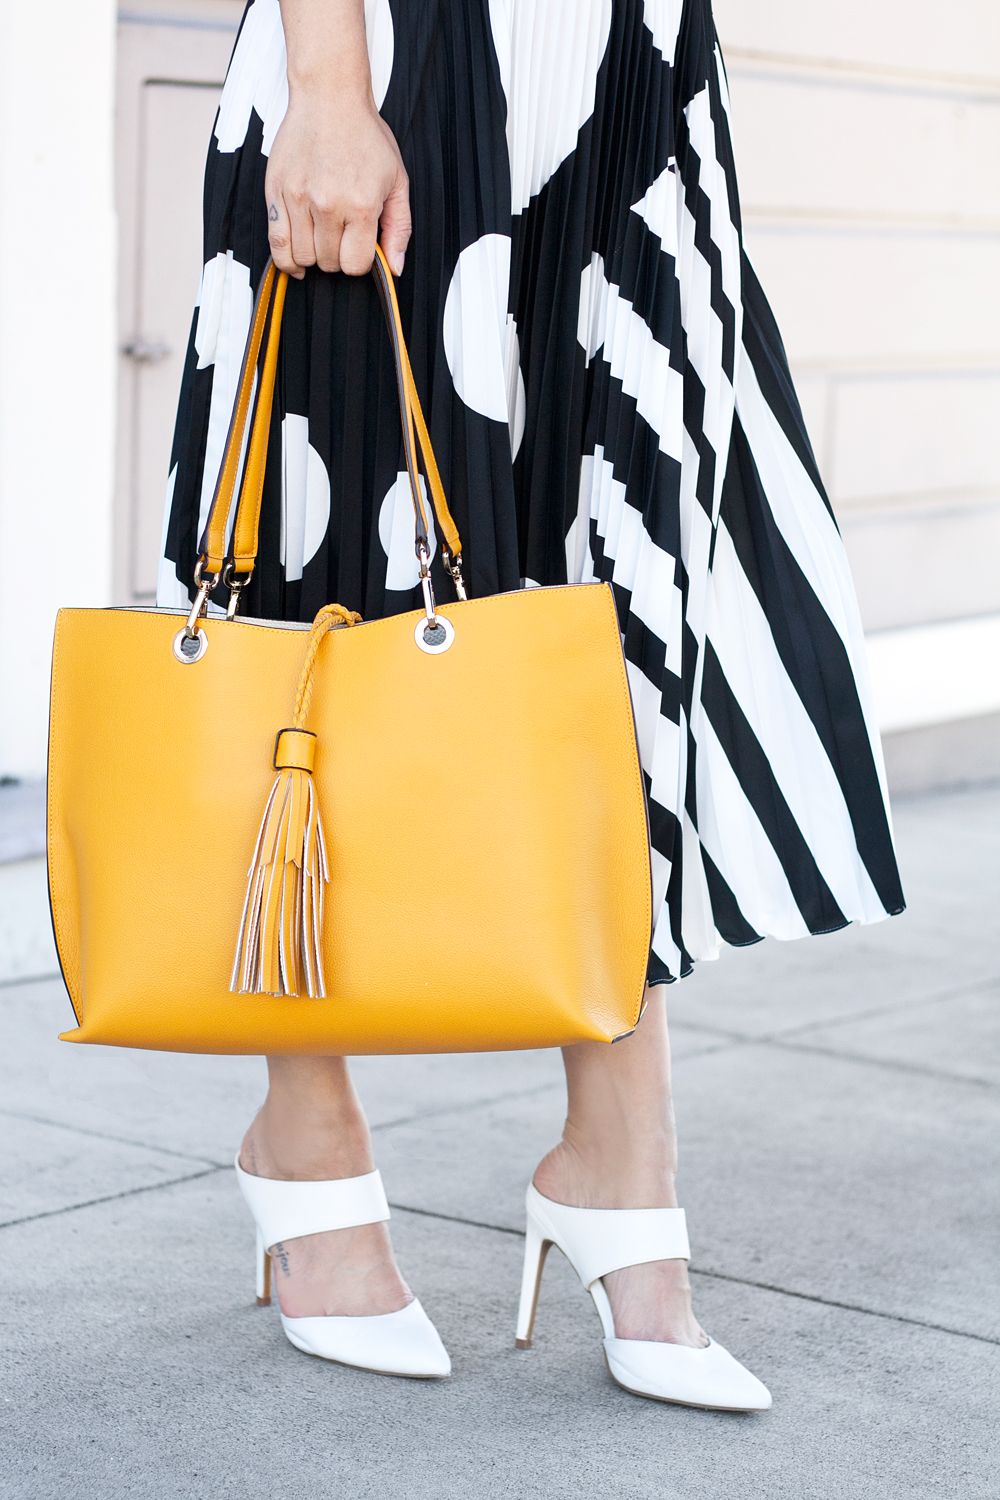 08blackwhite-dots-stripes-mustard-sf-sanfrancisco-style-fashion